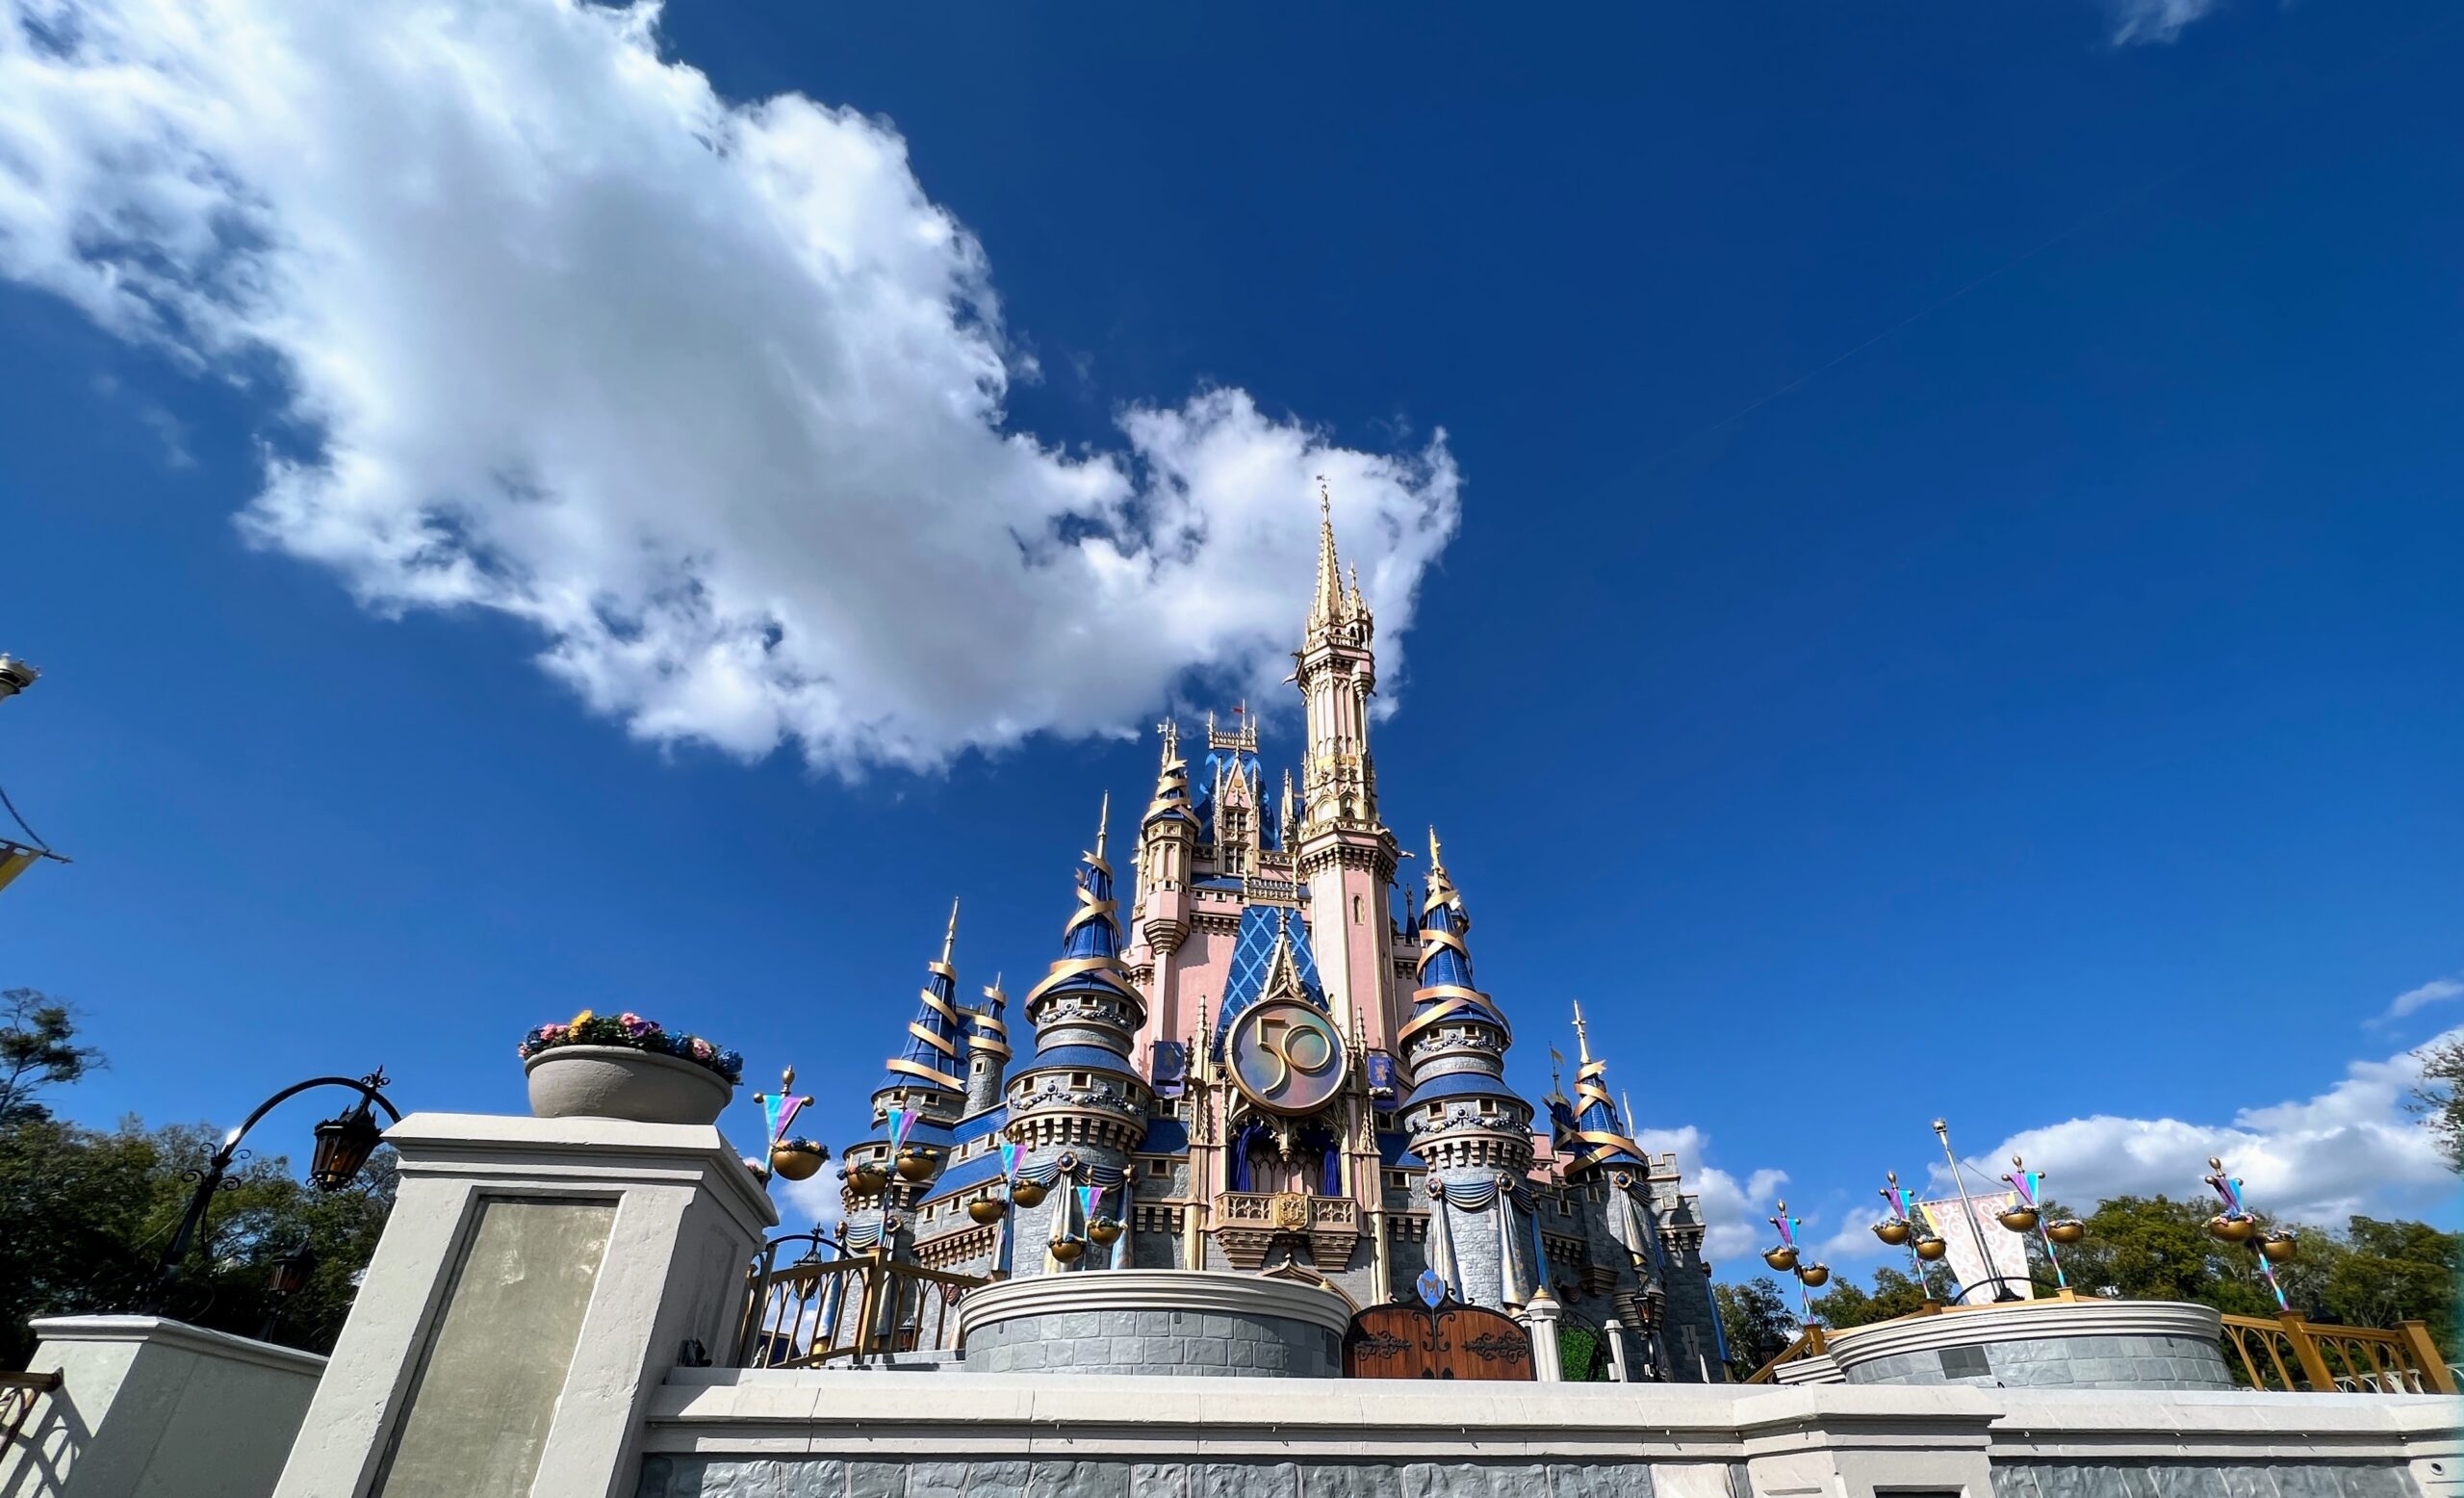 Cinderella castle at Walt Disney World. 60 day reservation tip sheet and timeline for bookings. 